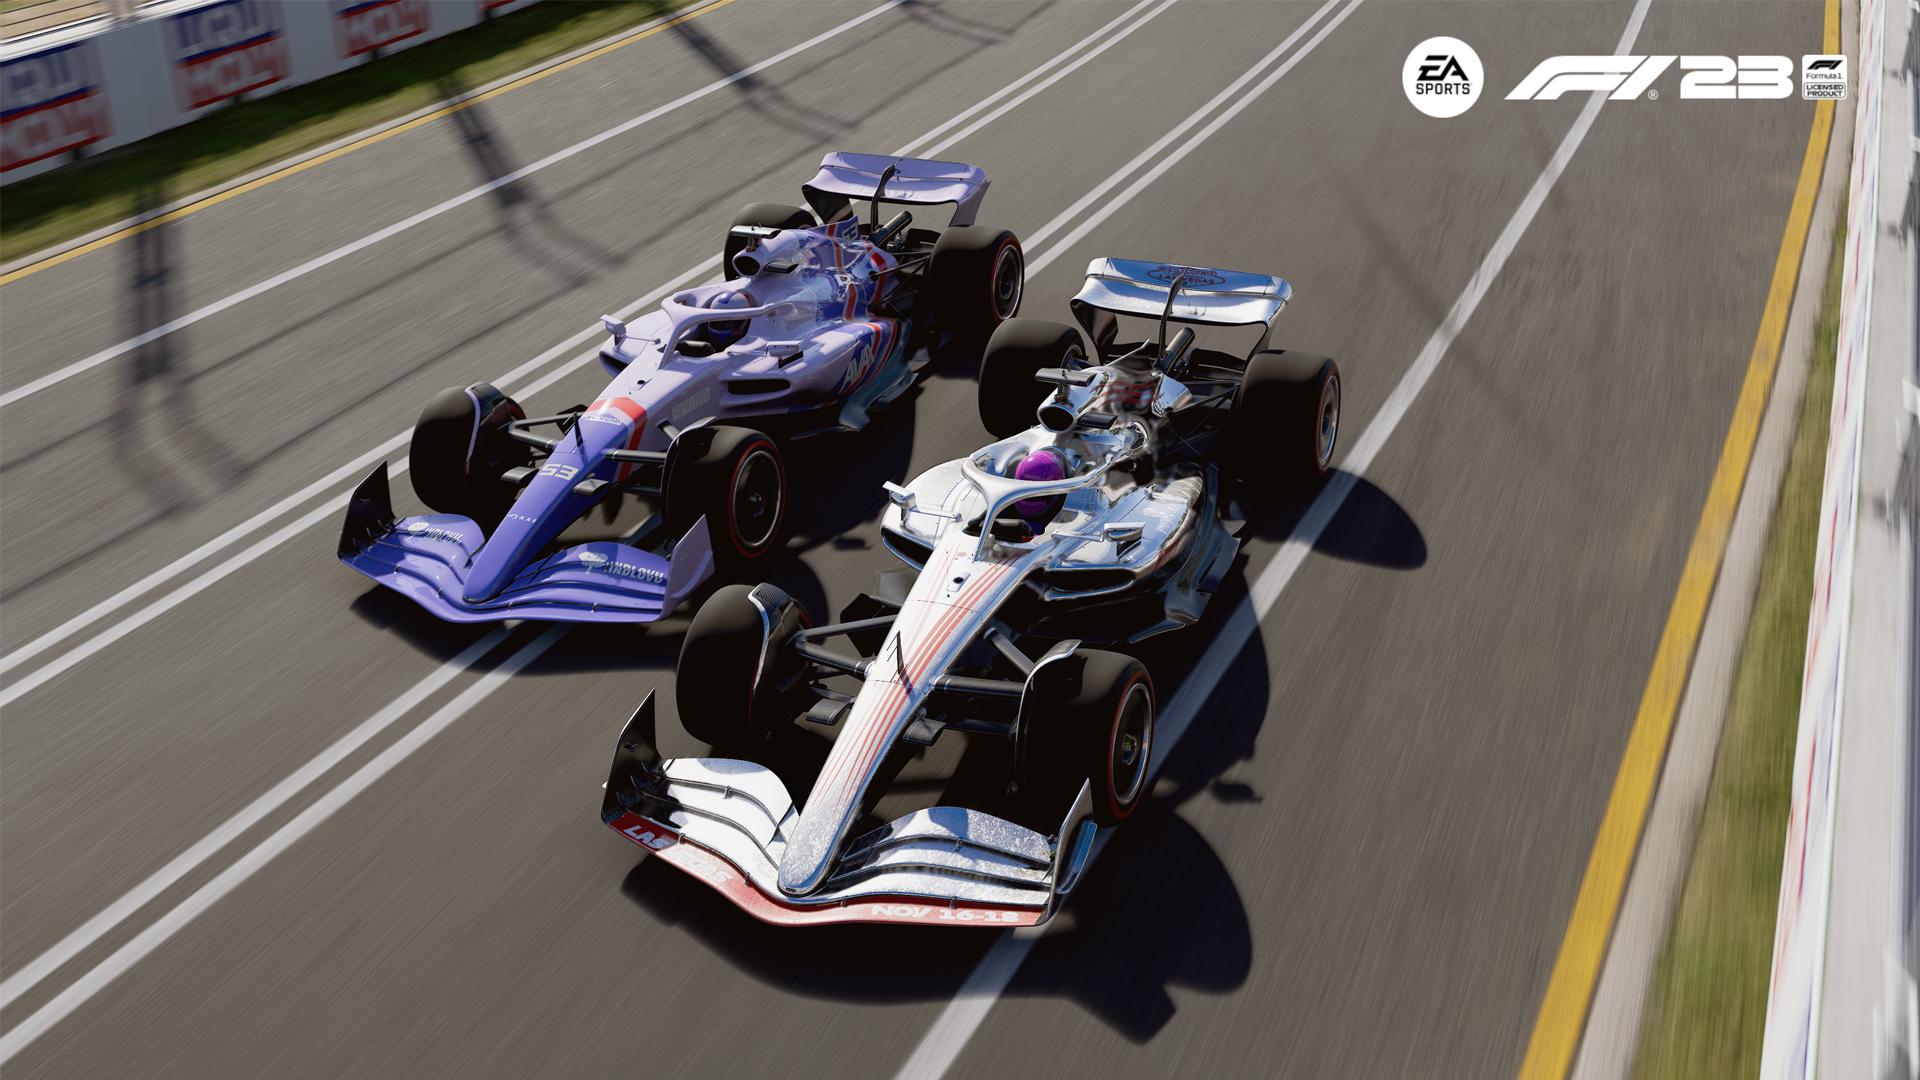 Podium Life: News & Previews for Car Racing Games Online